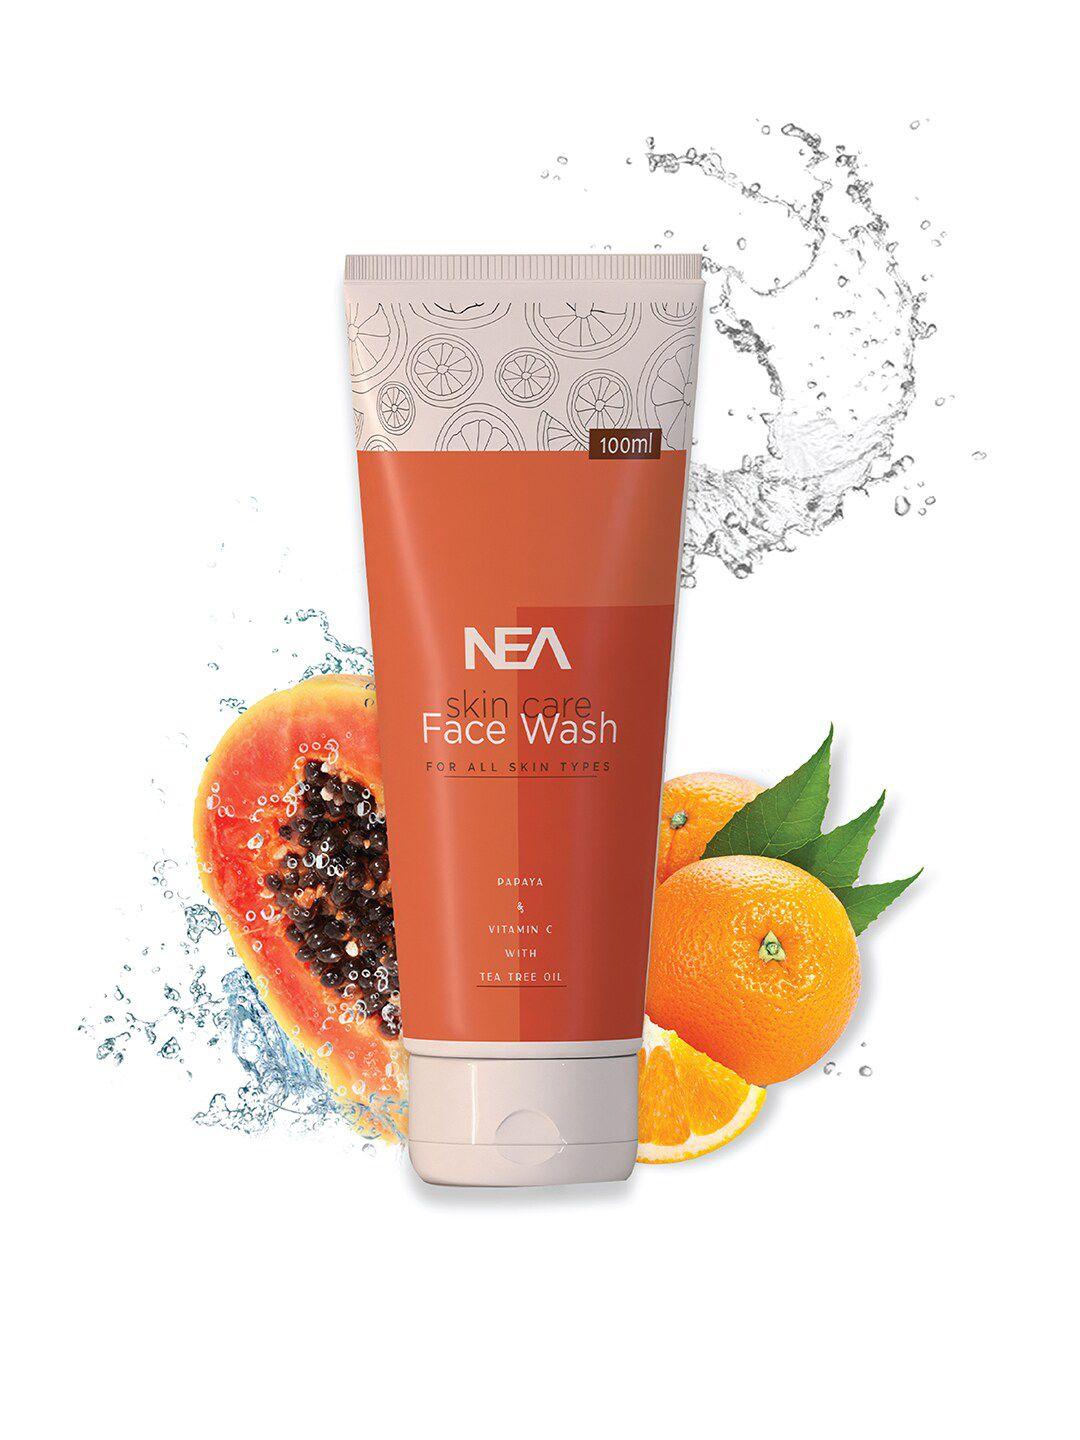 nea skincare face wash with papaya, vitamin c & tea tree oil for all skin types - 100 ml